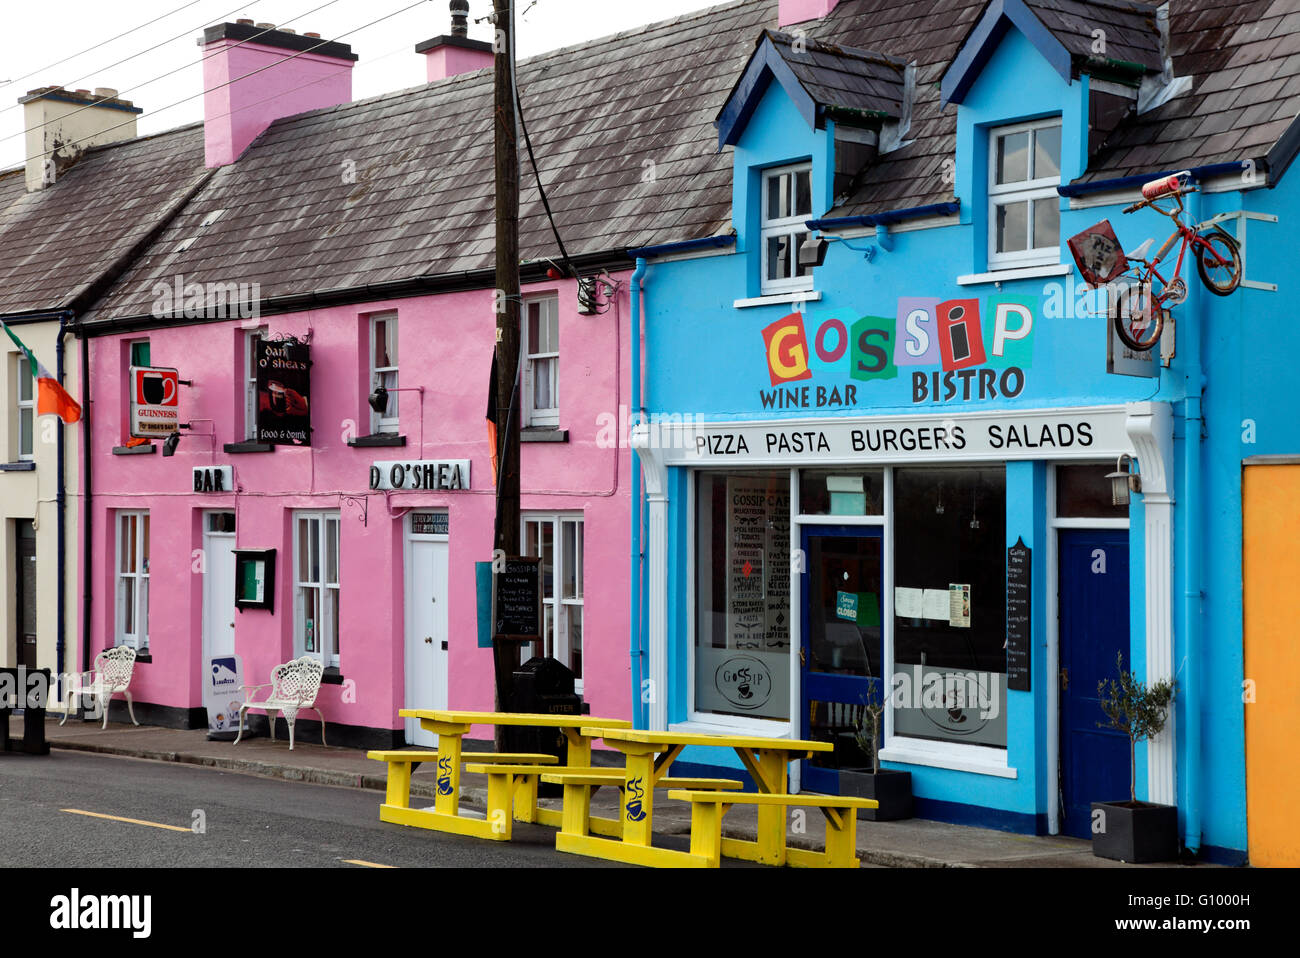 Dan O'Shea's Bar and Gossip Wine Bar in Sneem, County Kerry Stock Photo